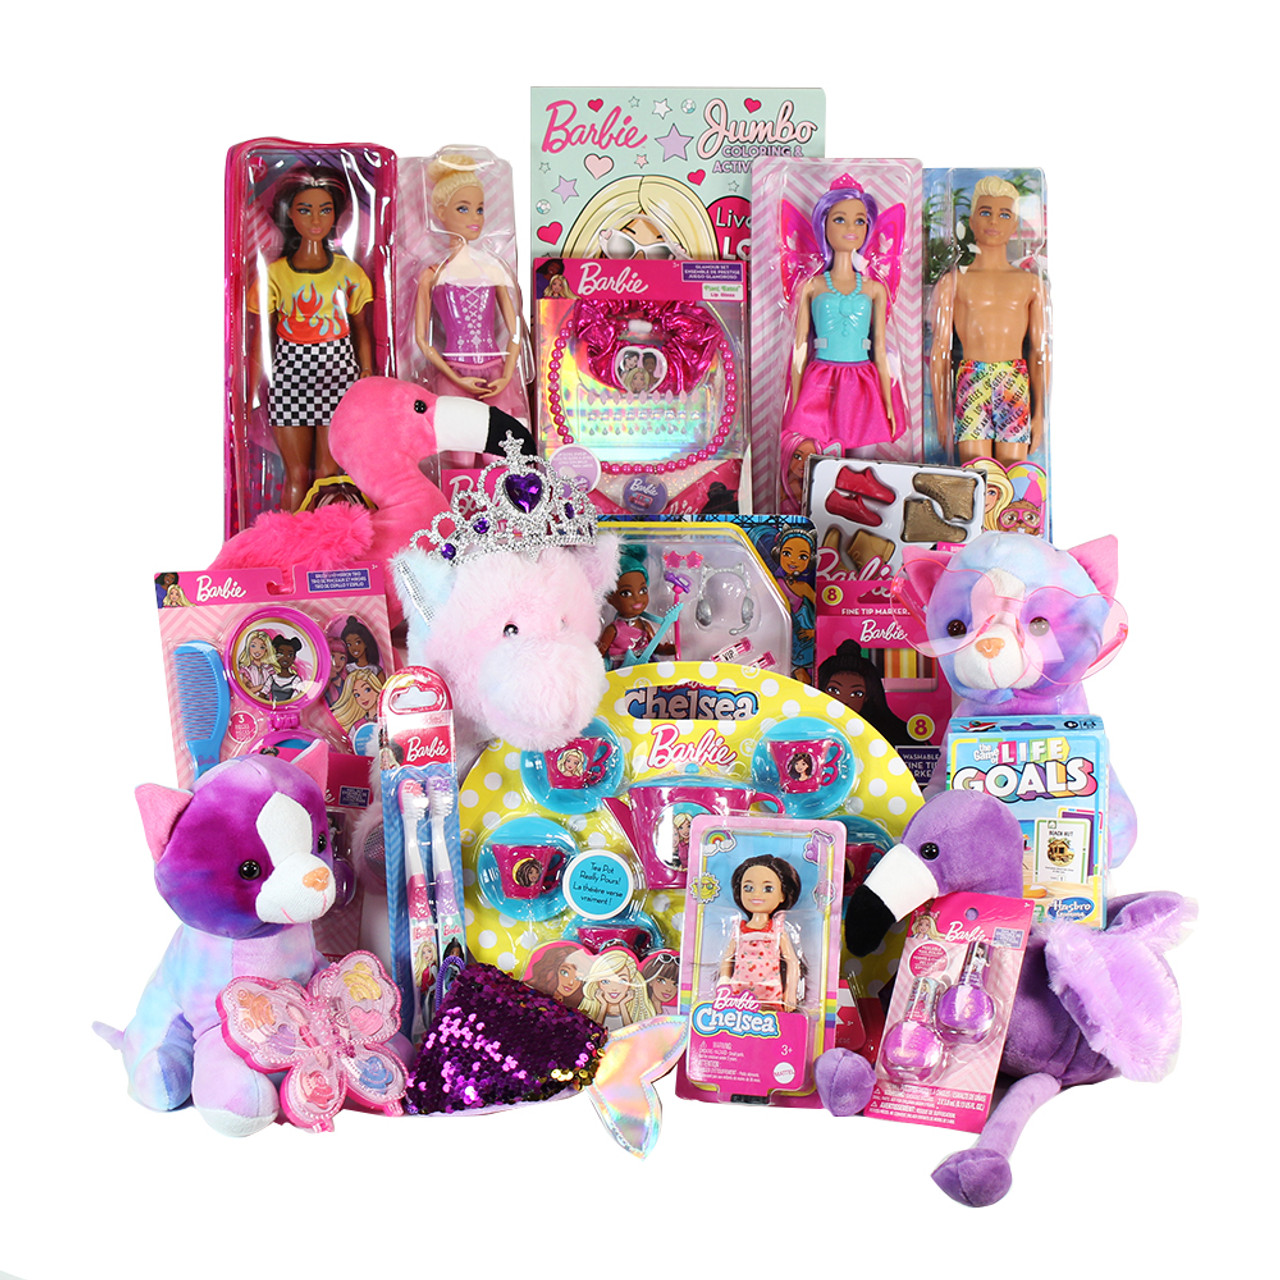 Assorted Barbie Toy Crane Mix 100 pc